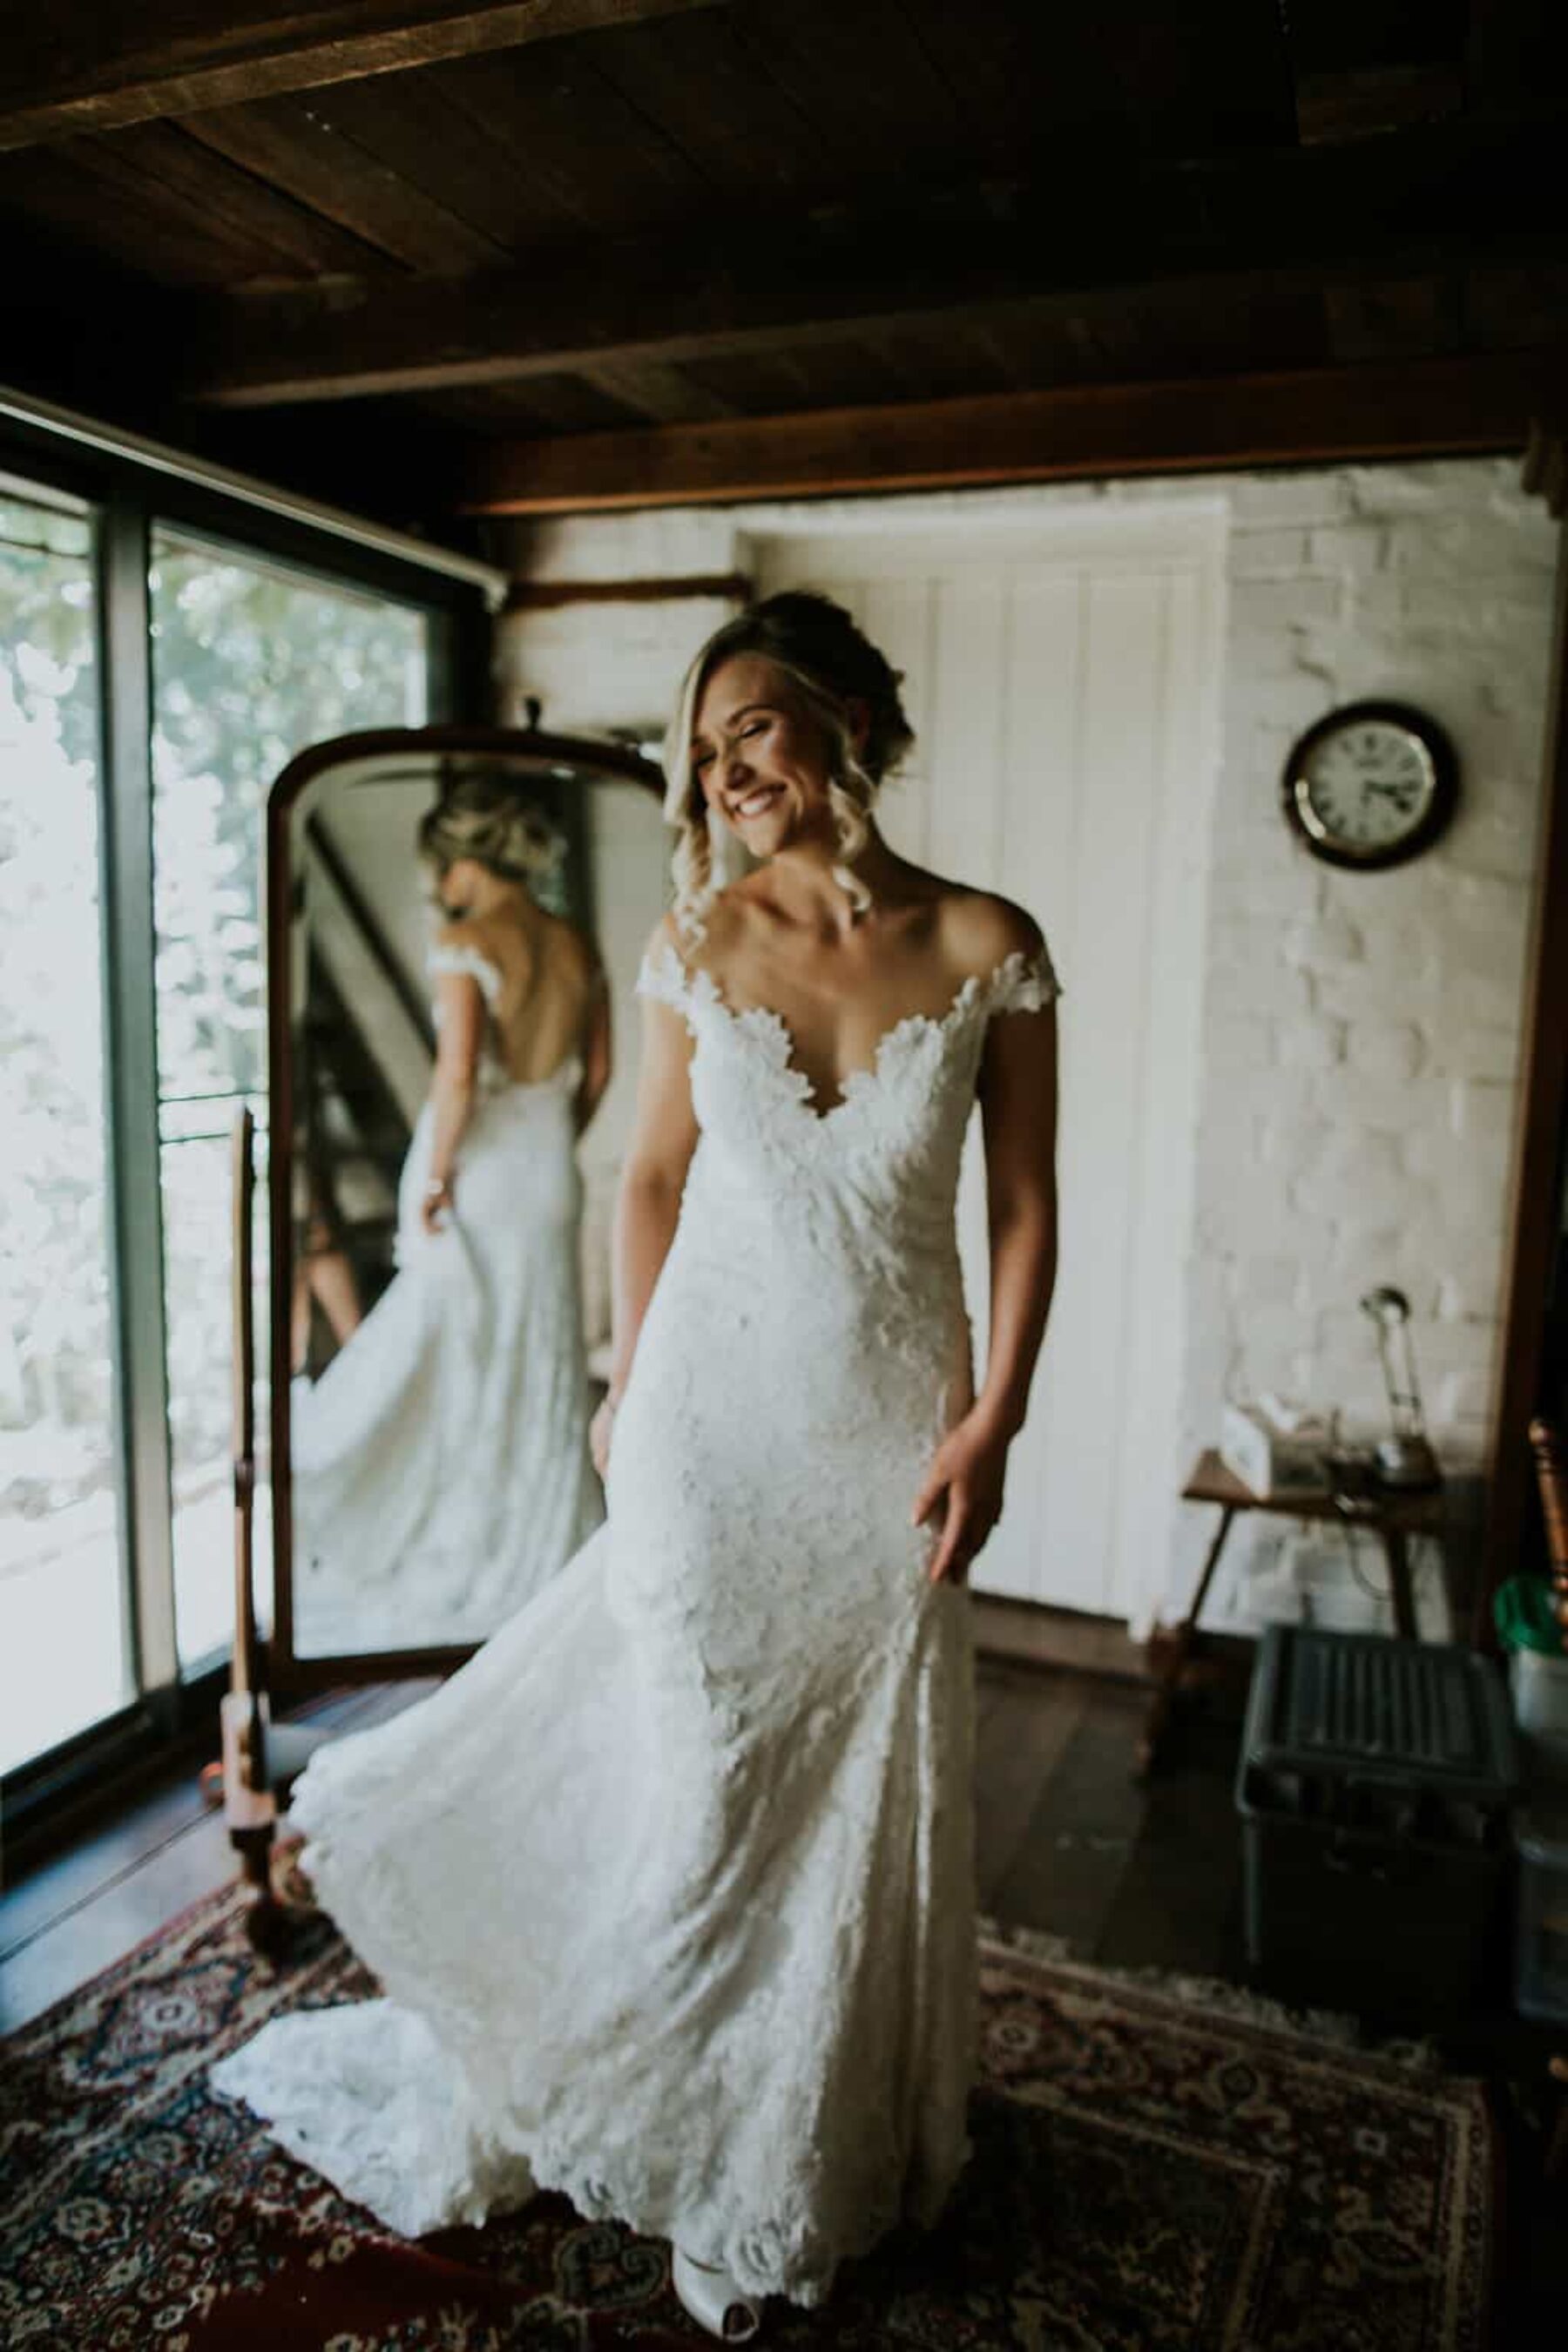 Lace off-shoulder wedding dress by Olvi's